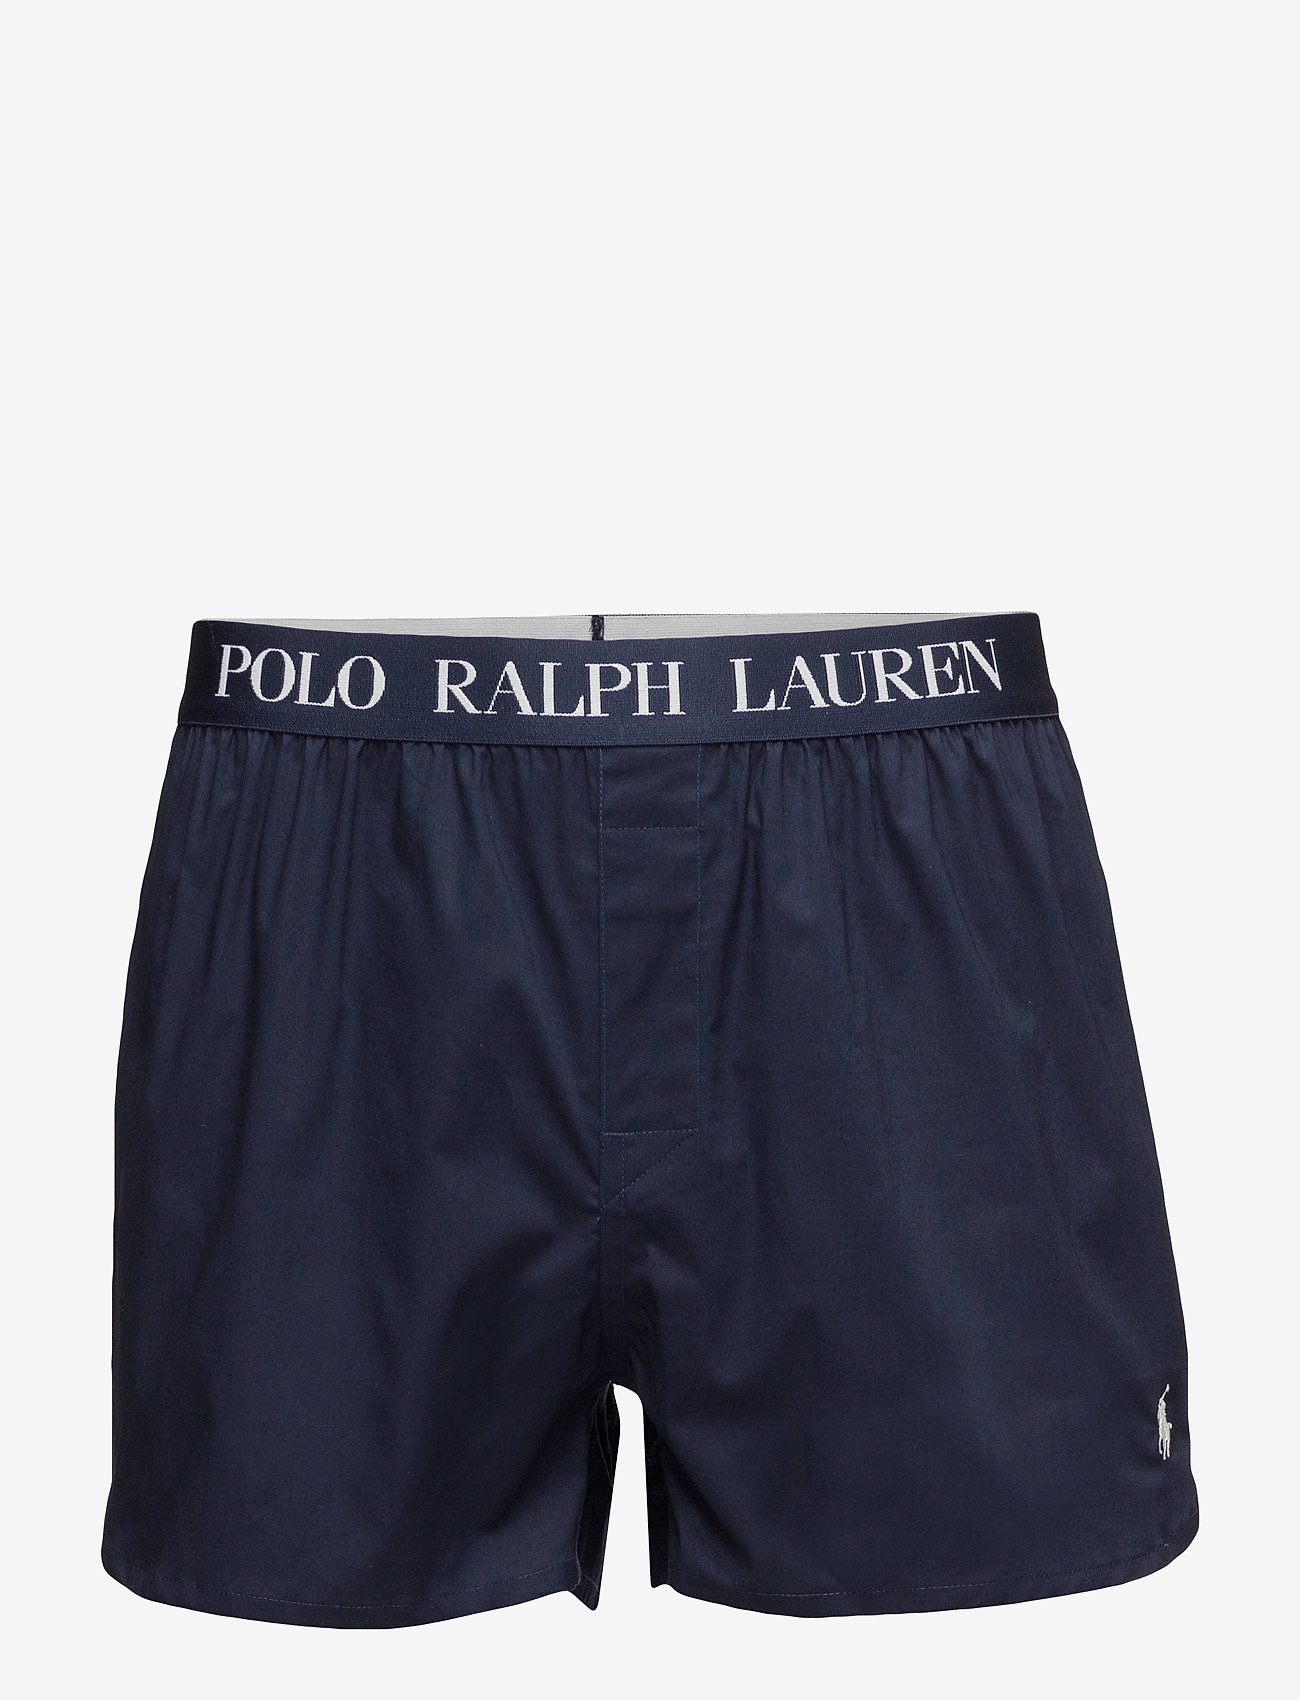 polo ralph lauren boxer shorts